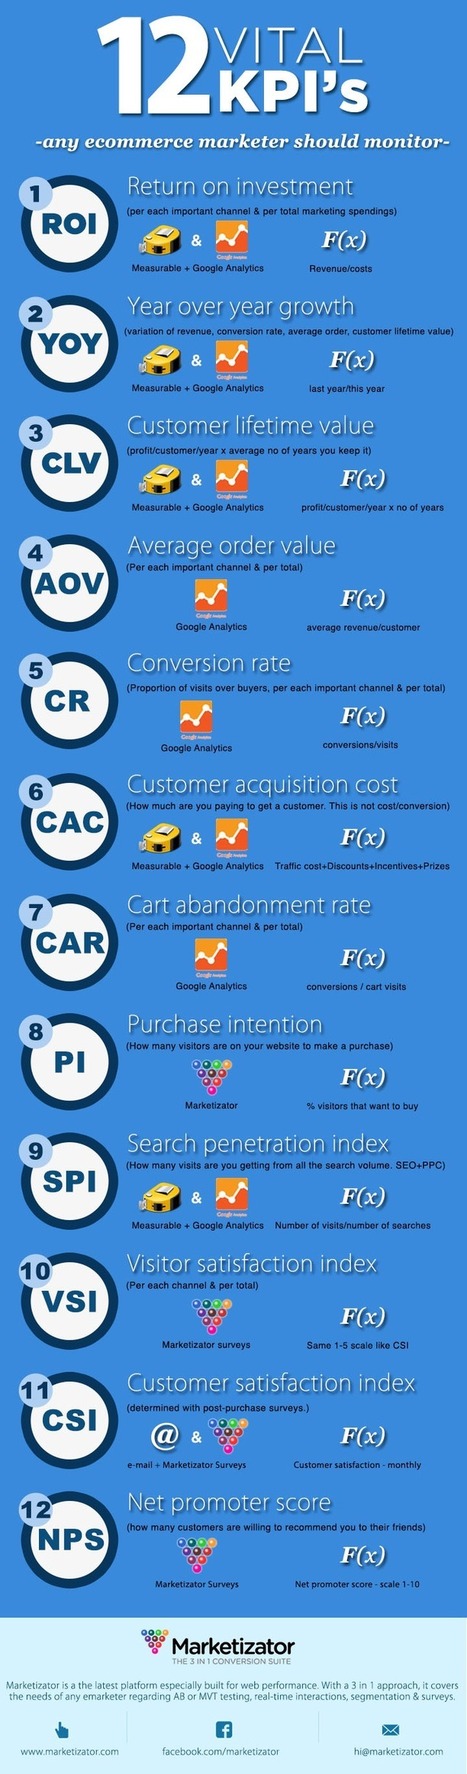 12 KPI's vitales en Comercio Electrónico #infografia #marketing #ecommerce | Seo, Social Media Marketing | Scoop.it